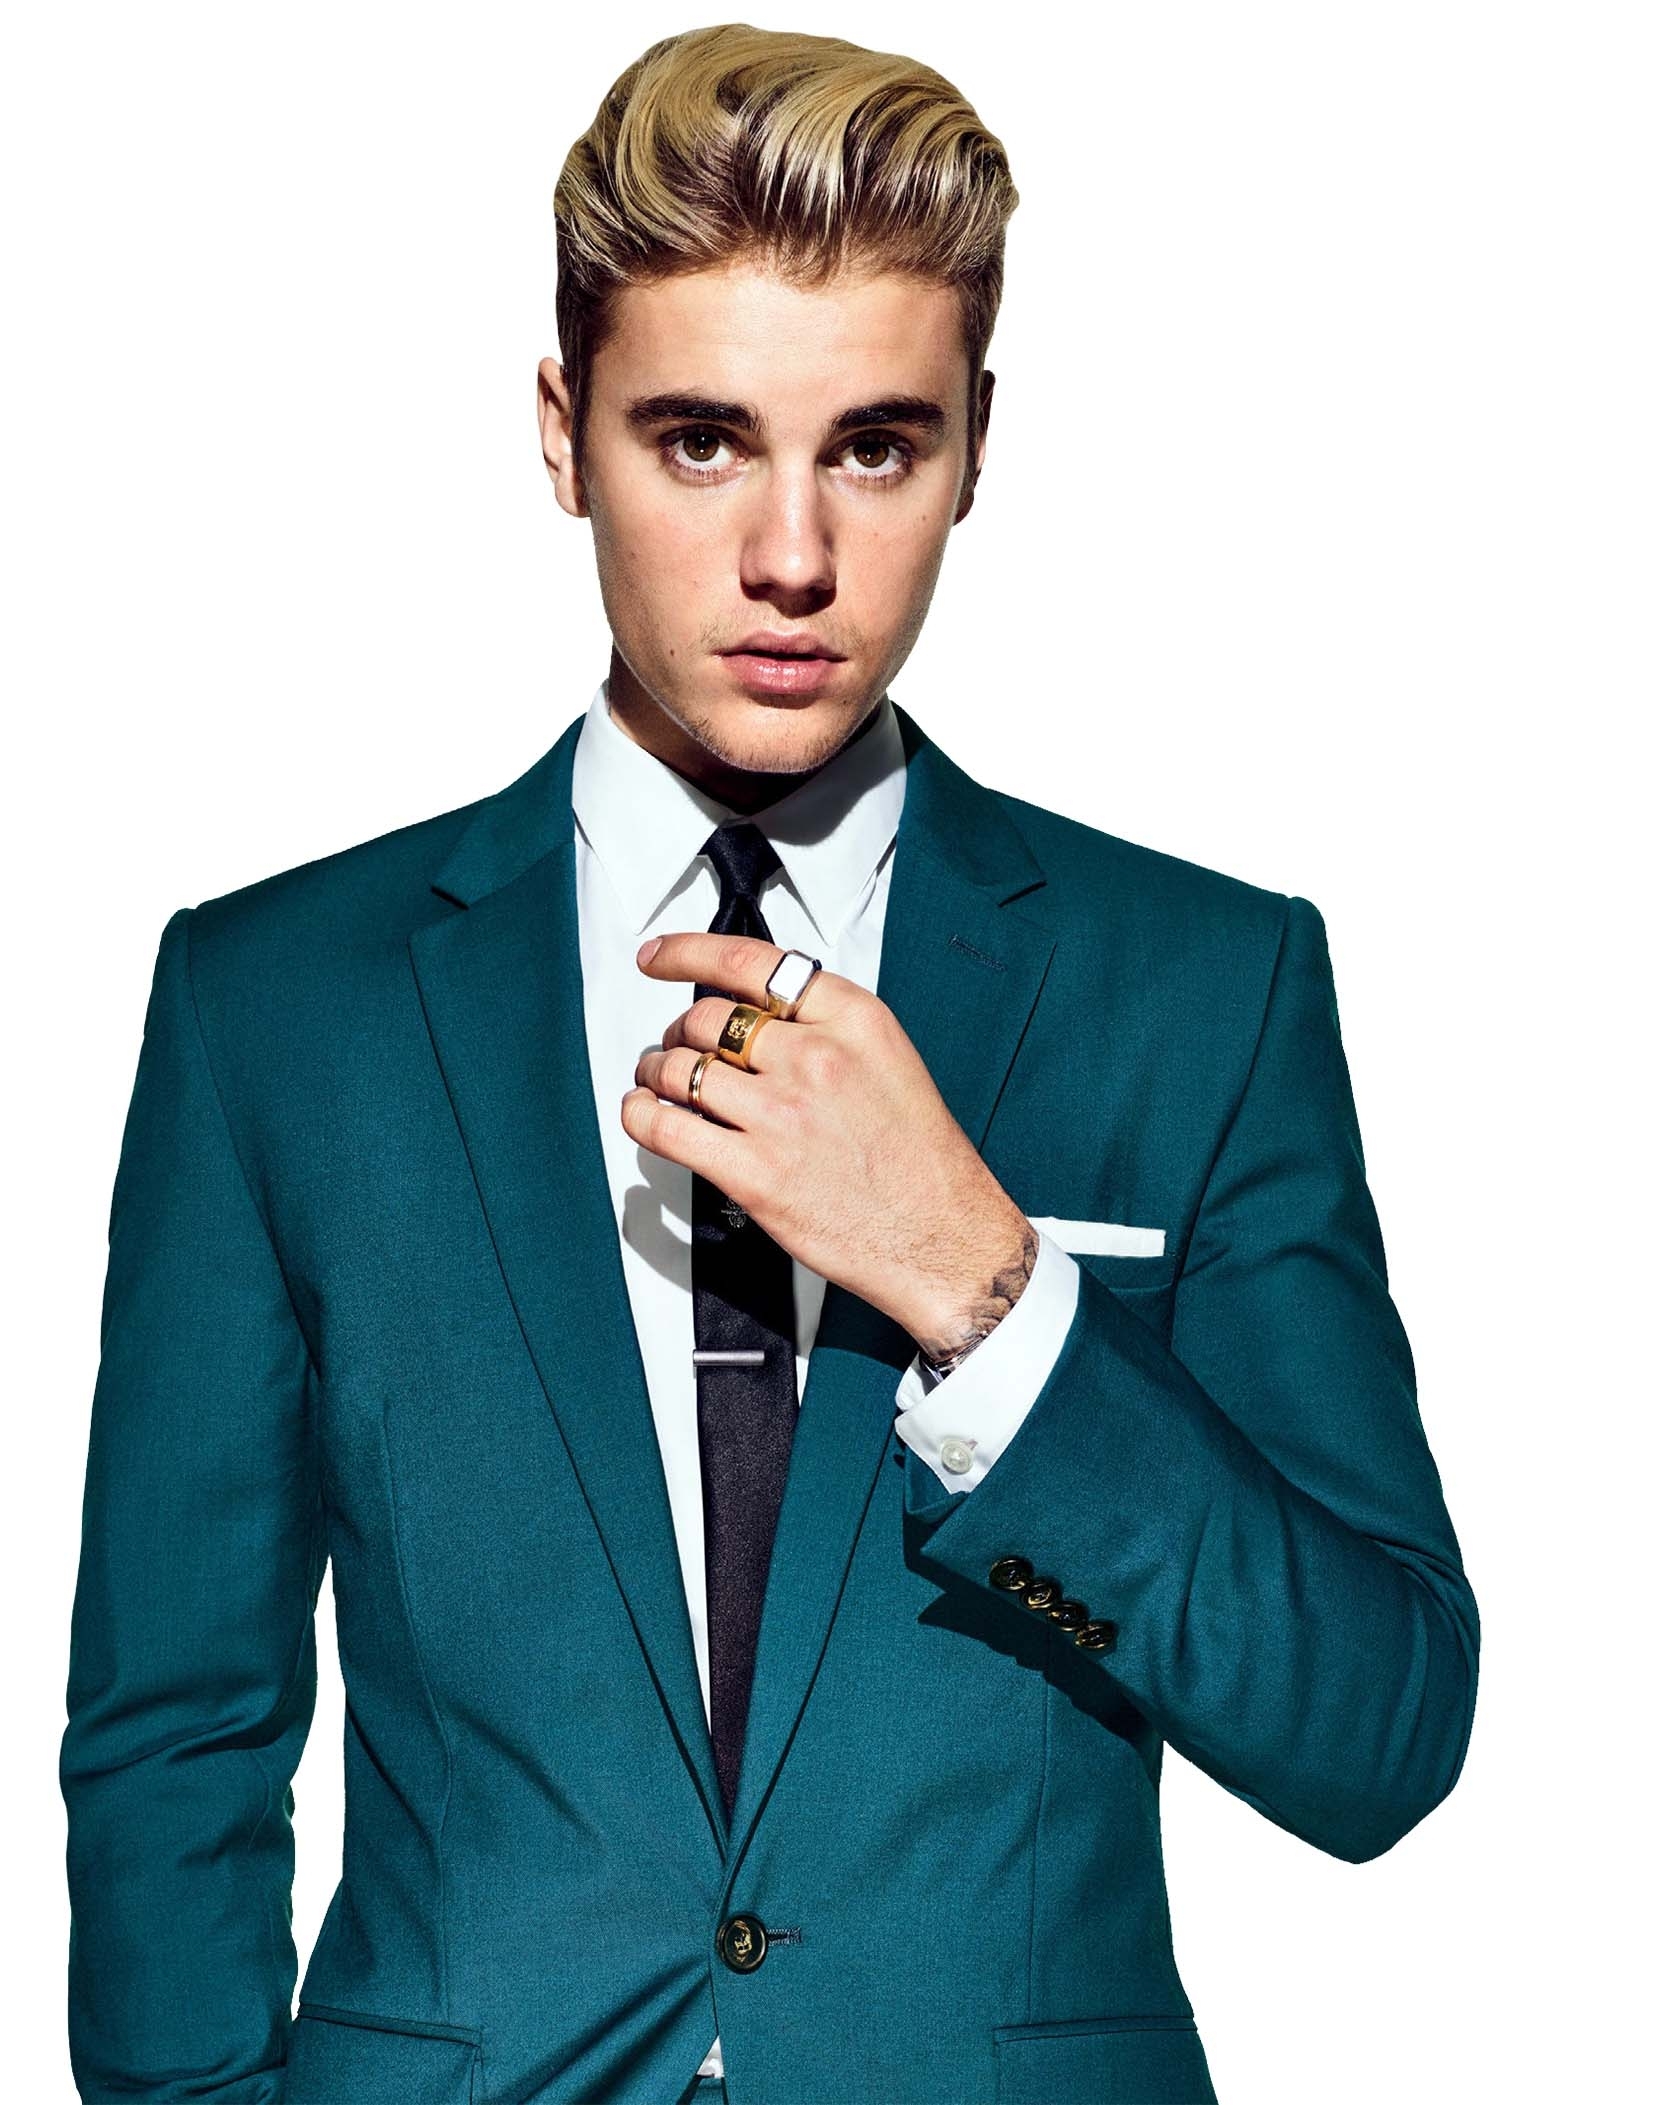 10 Best Justin Bieber Hd Photos FULL HD 1080p For PC Desktop